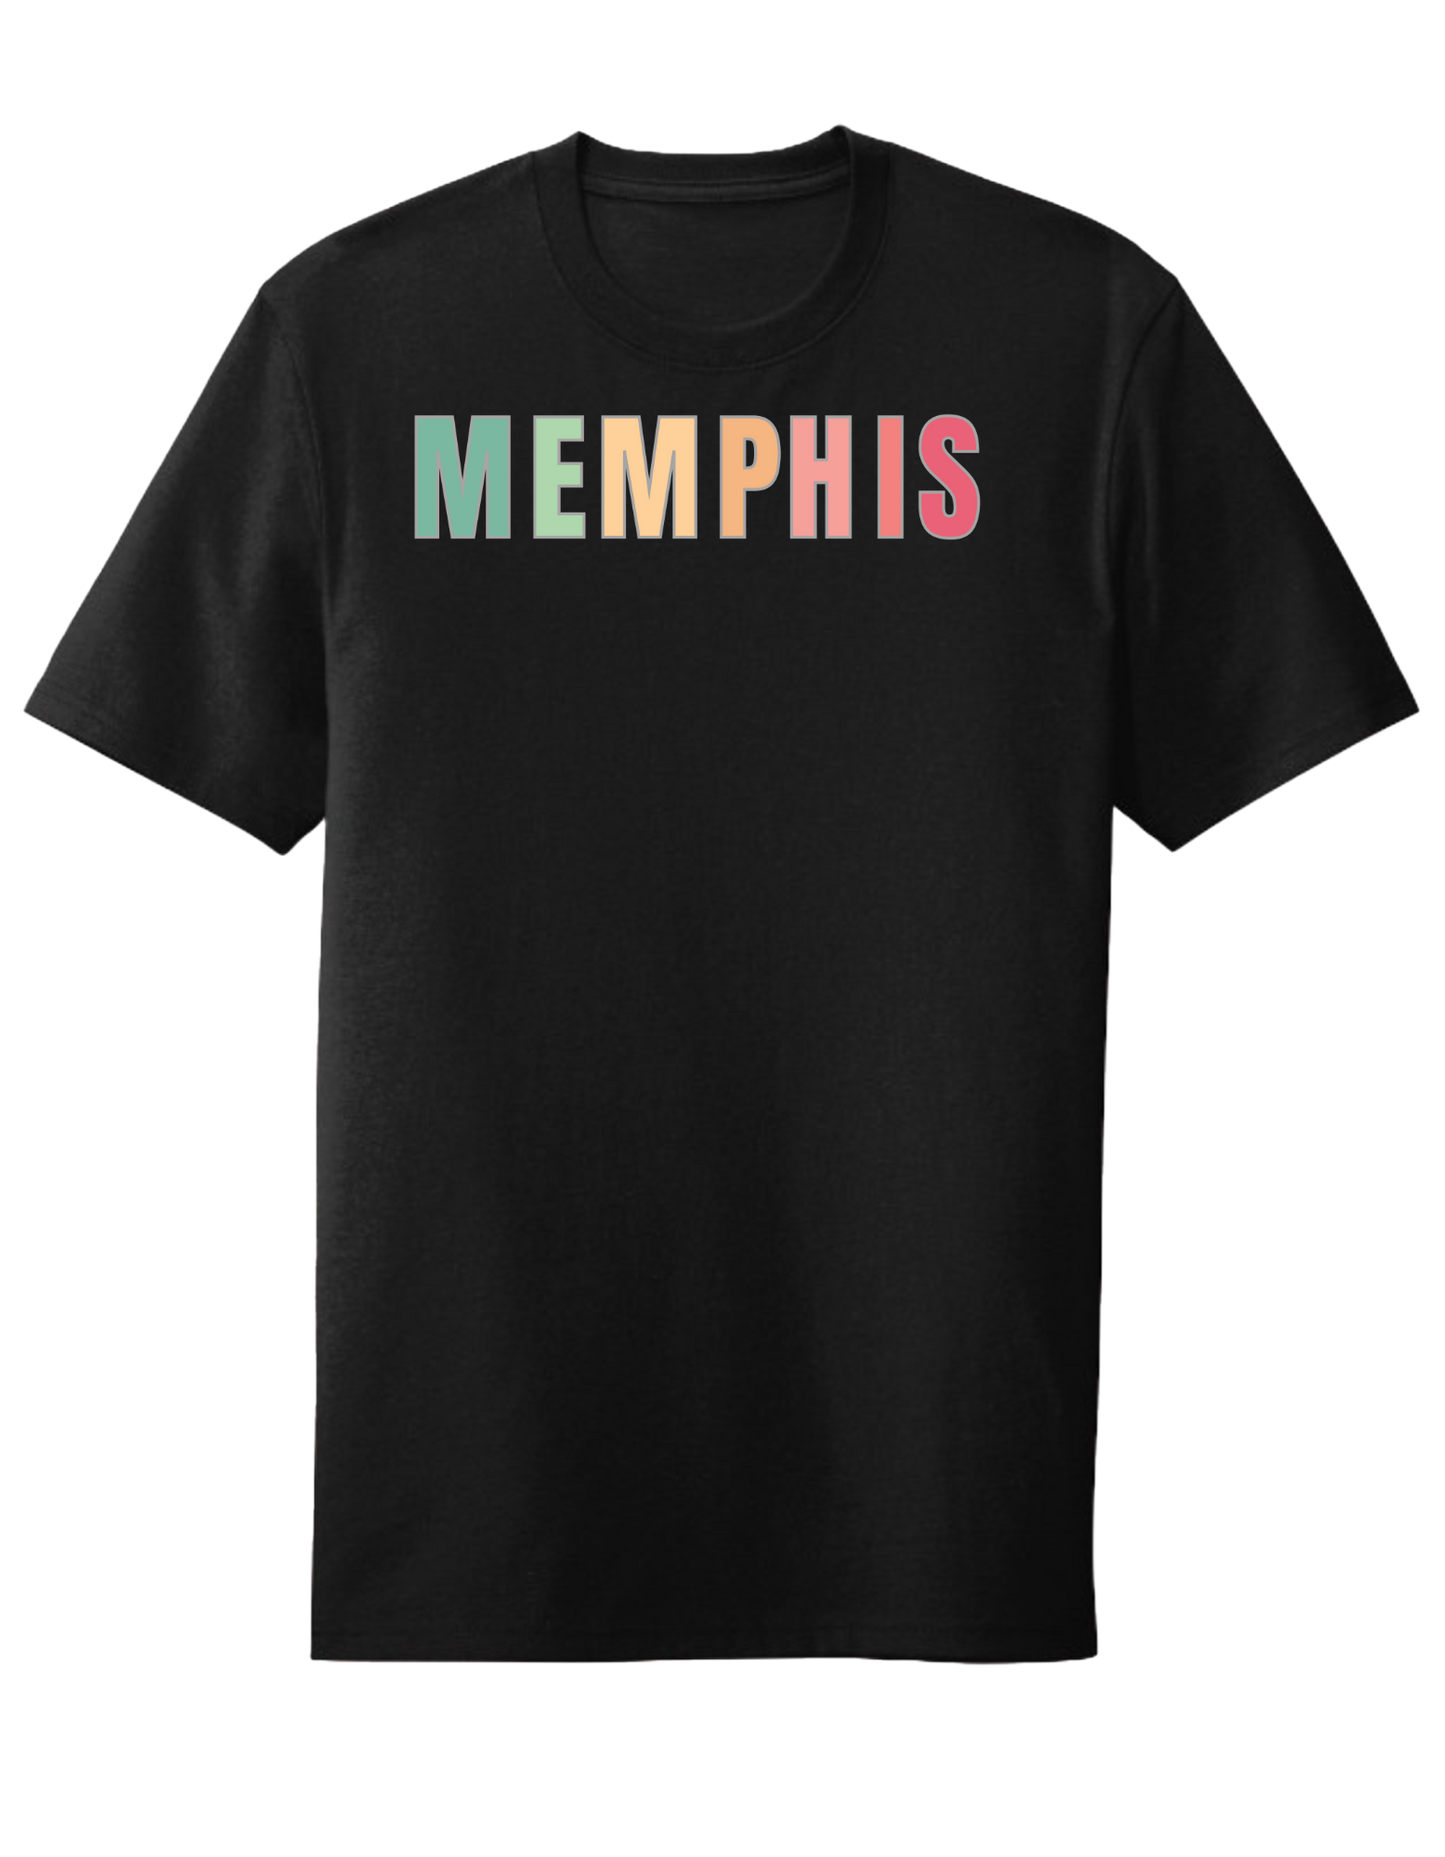 All Memphis T-Shirt - Black